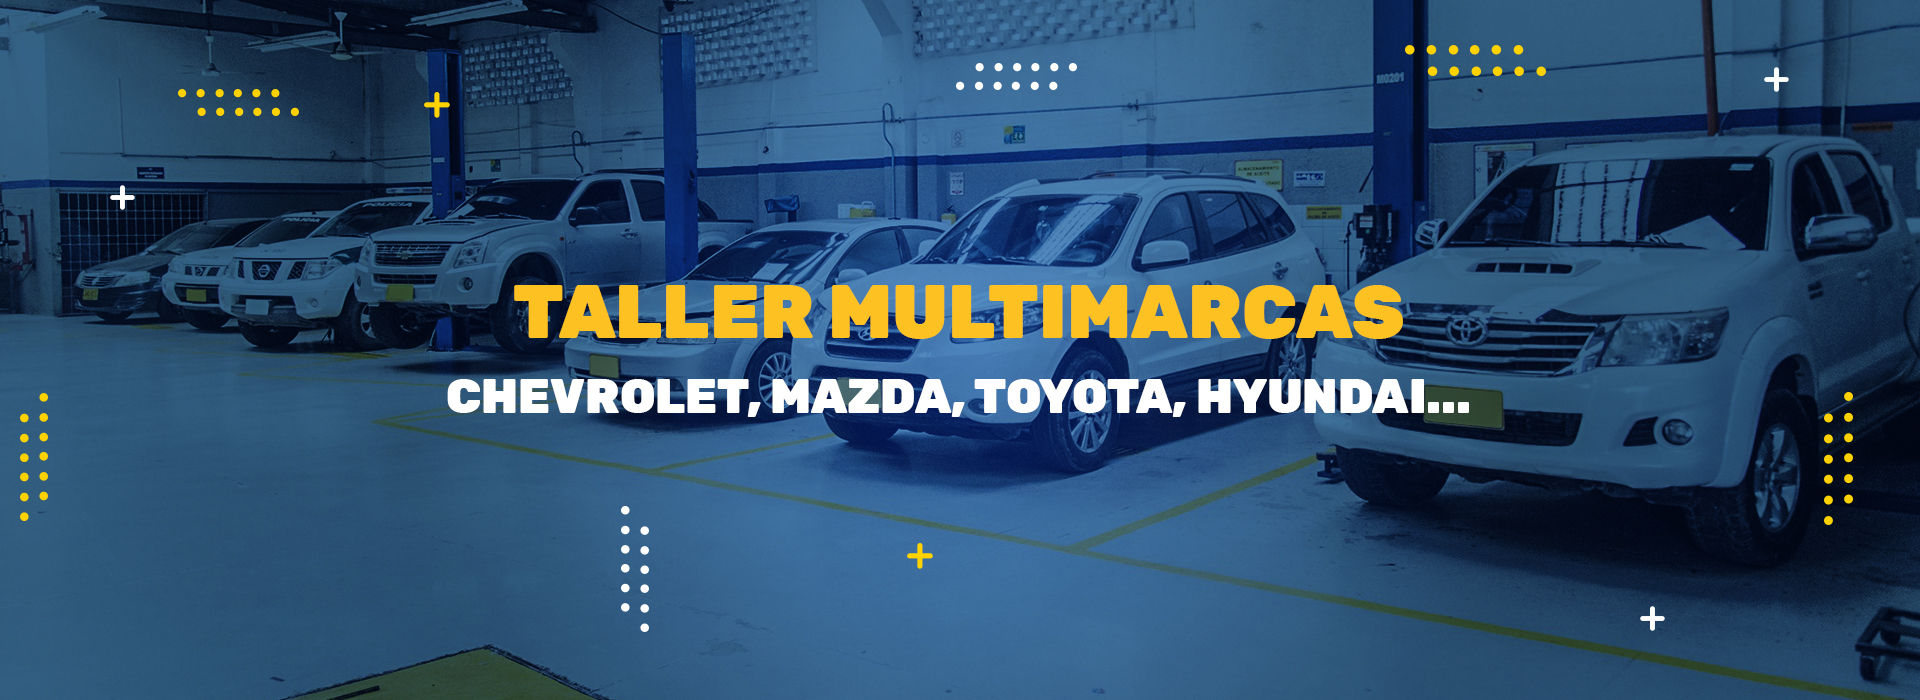 Taller multimarcas Chevrolet, Mazda, Toyota, Renault, Kia, Hyundai...